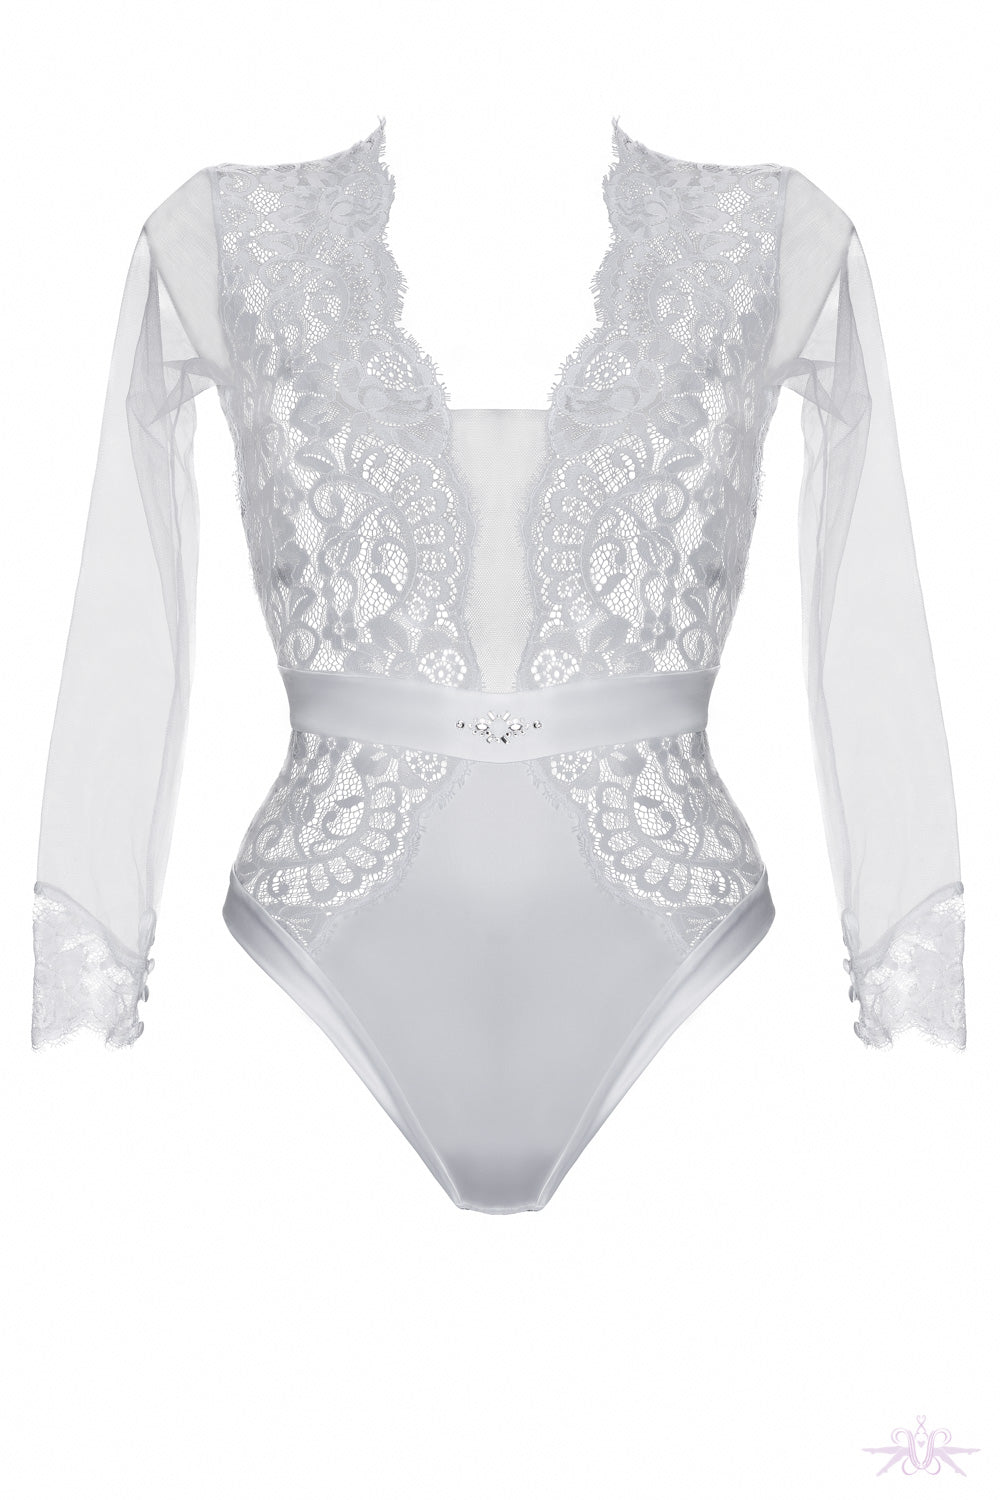 Parisian lace bodysuit in white